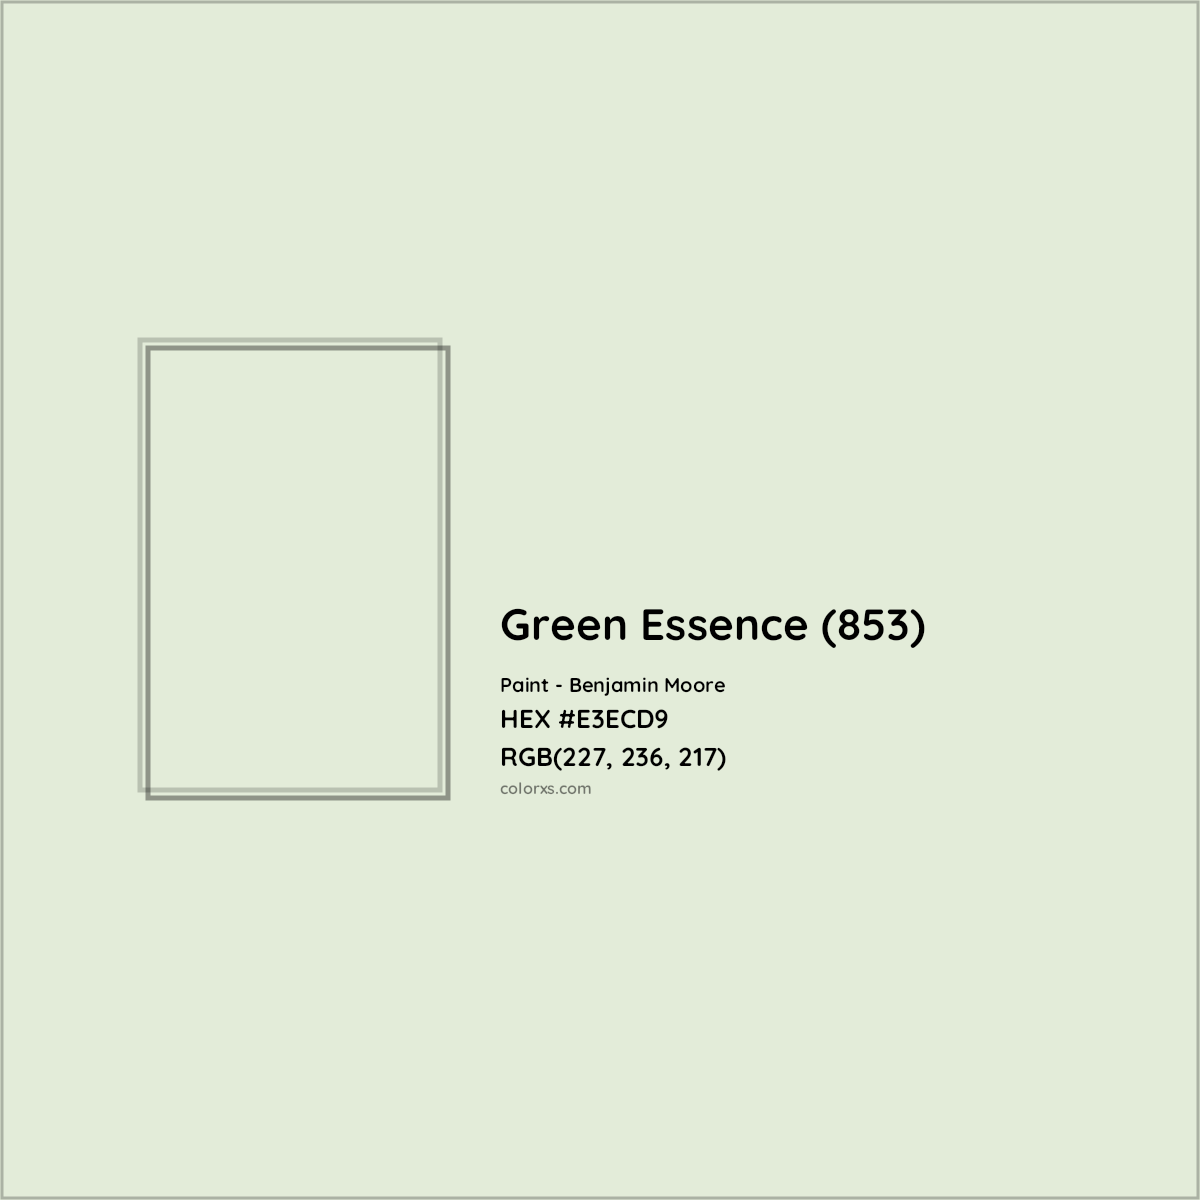 HEX #E3ECD9 Green Essence (853) Paint Benjamin Moore - Color Code